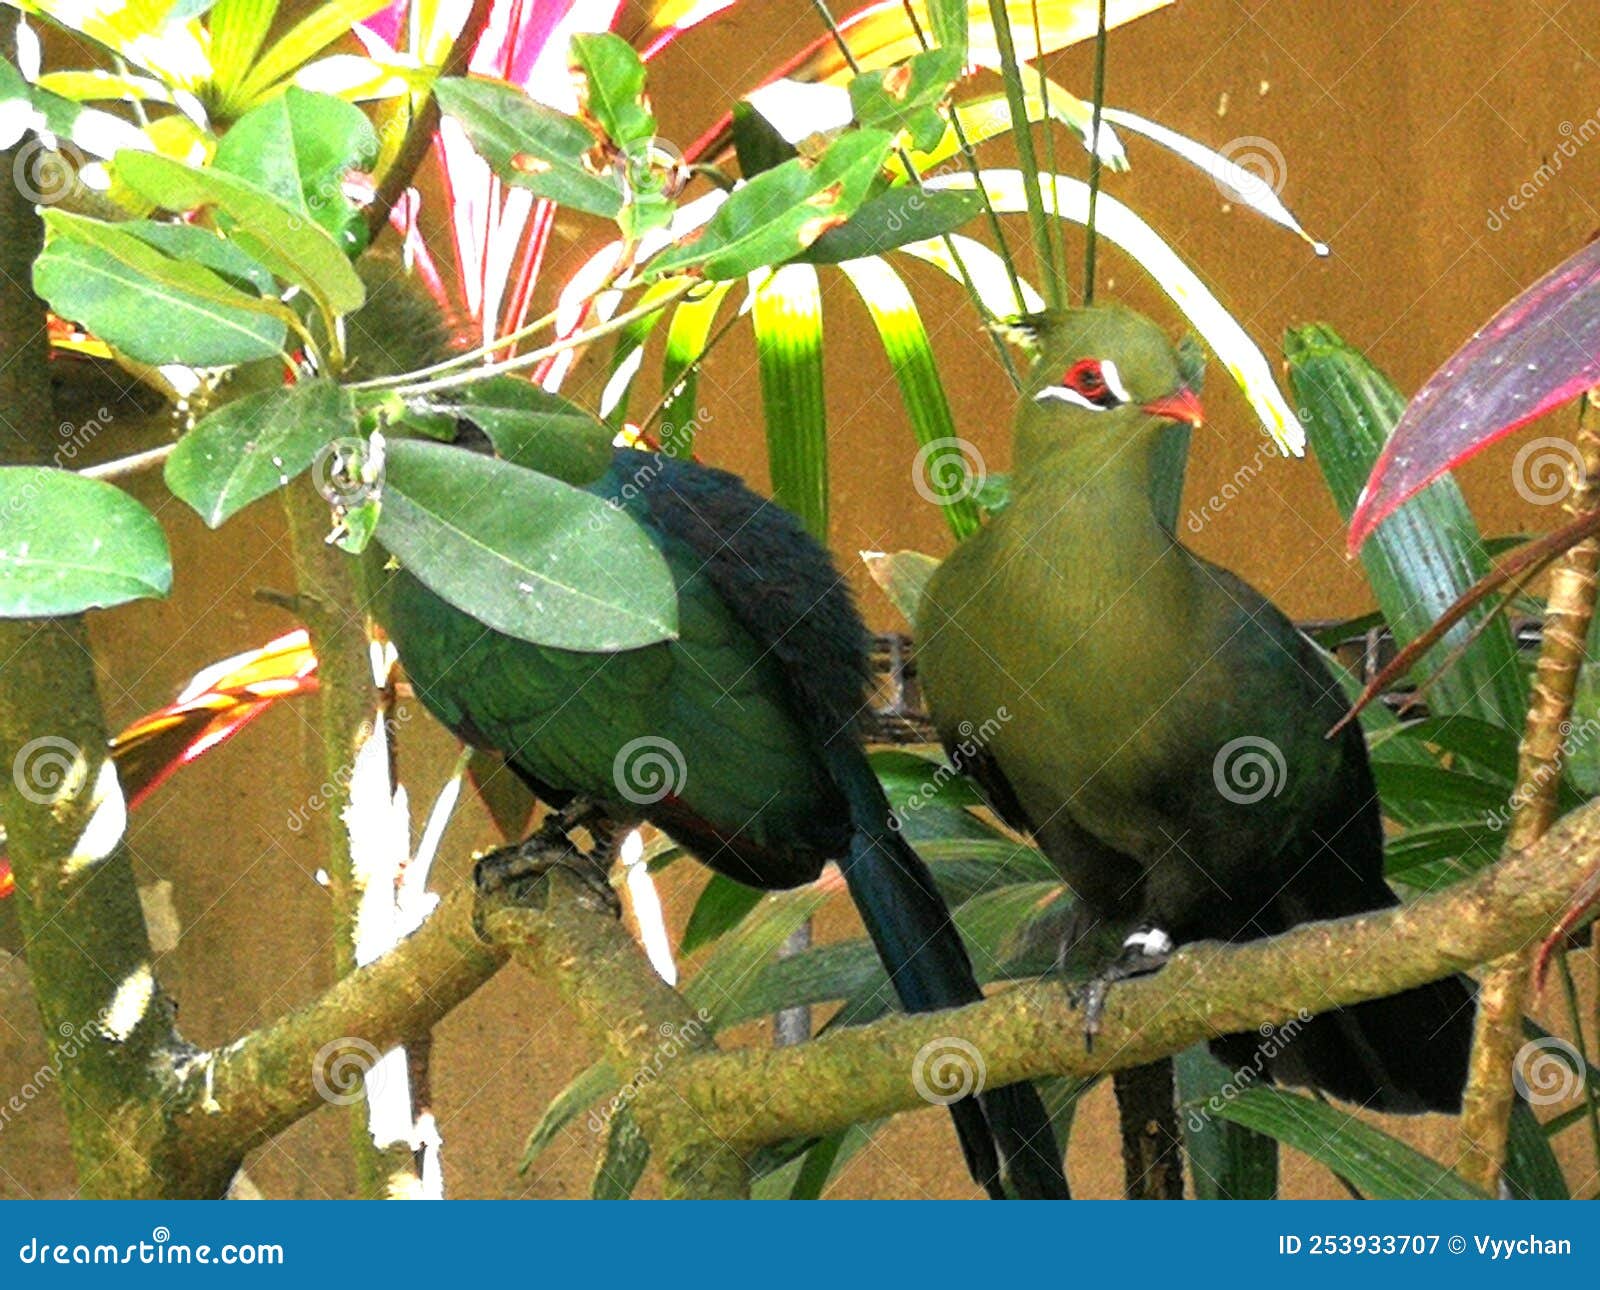 indonesia sanur bali bird park tropical birds colorful birds endangered parrot macaw birdwatching birdwatch chilling feather